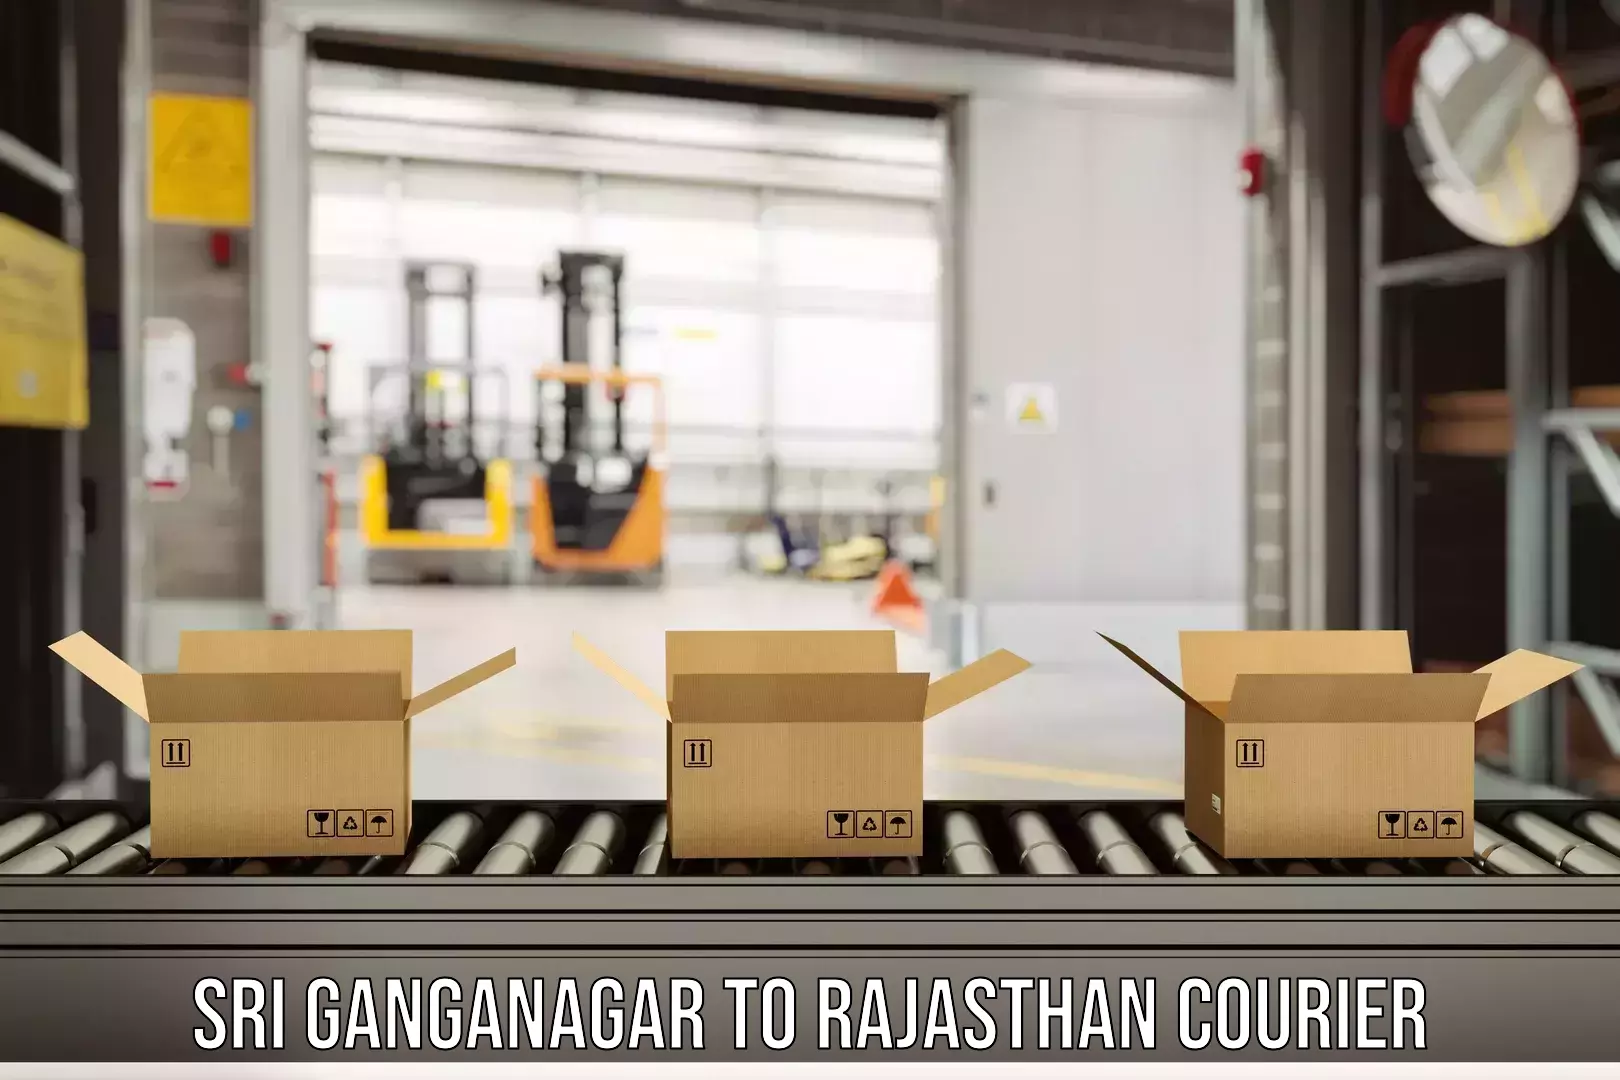 Speedy delivery service Sri Ganganagar to Jodhpur